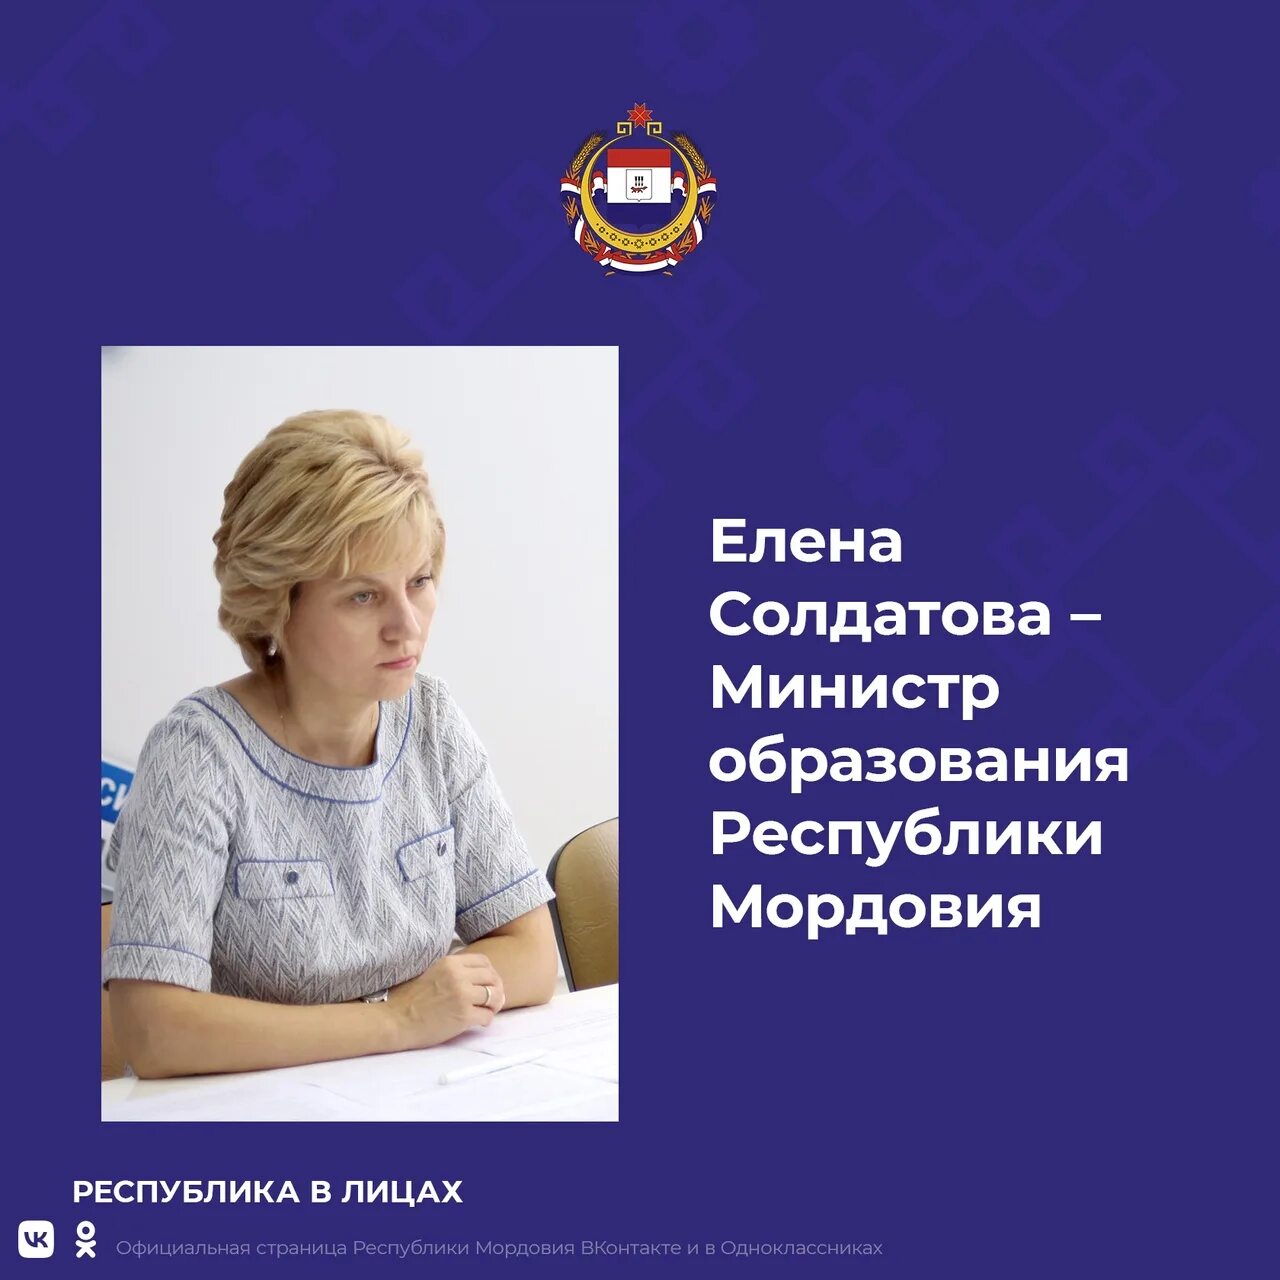 Министр образования Республики Мордовия Солдатова. Министерство образования мордовии сайт